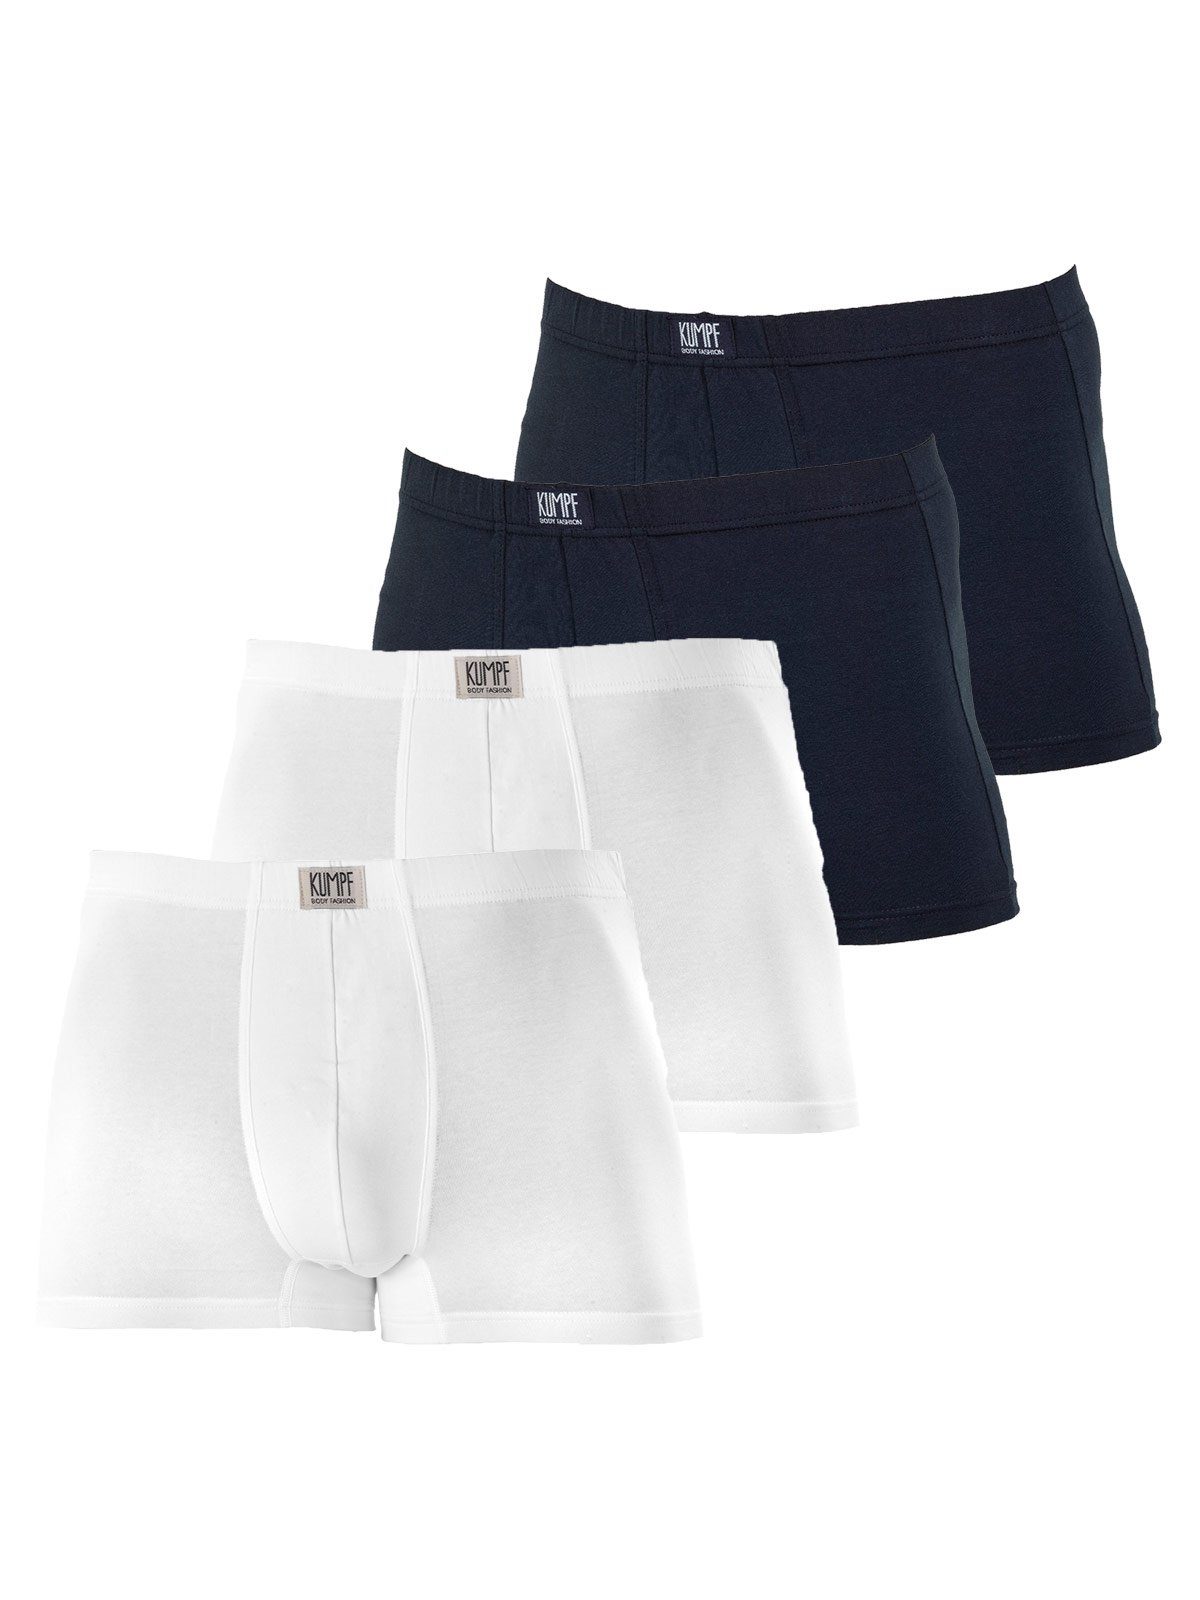 4er navy Cotton (Spar-Set, Pants Herren Pants Bio KUMPF Markenqualität Retro 4-St) weiss hohe Sparpack